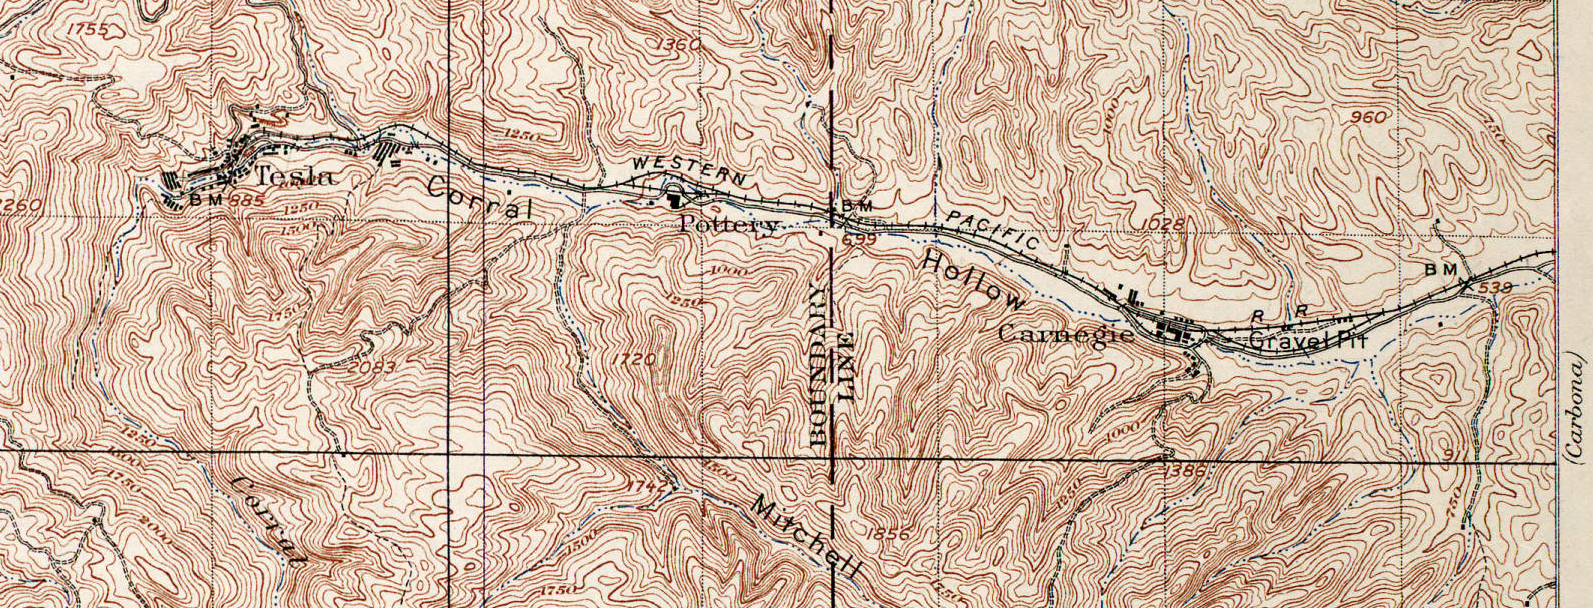 Corral Hollow, California (1907 USGS Map)